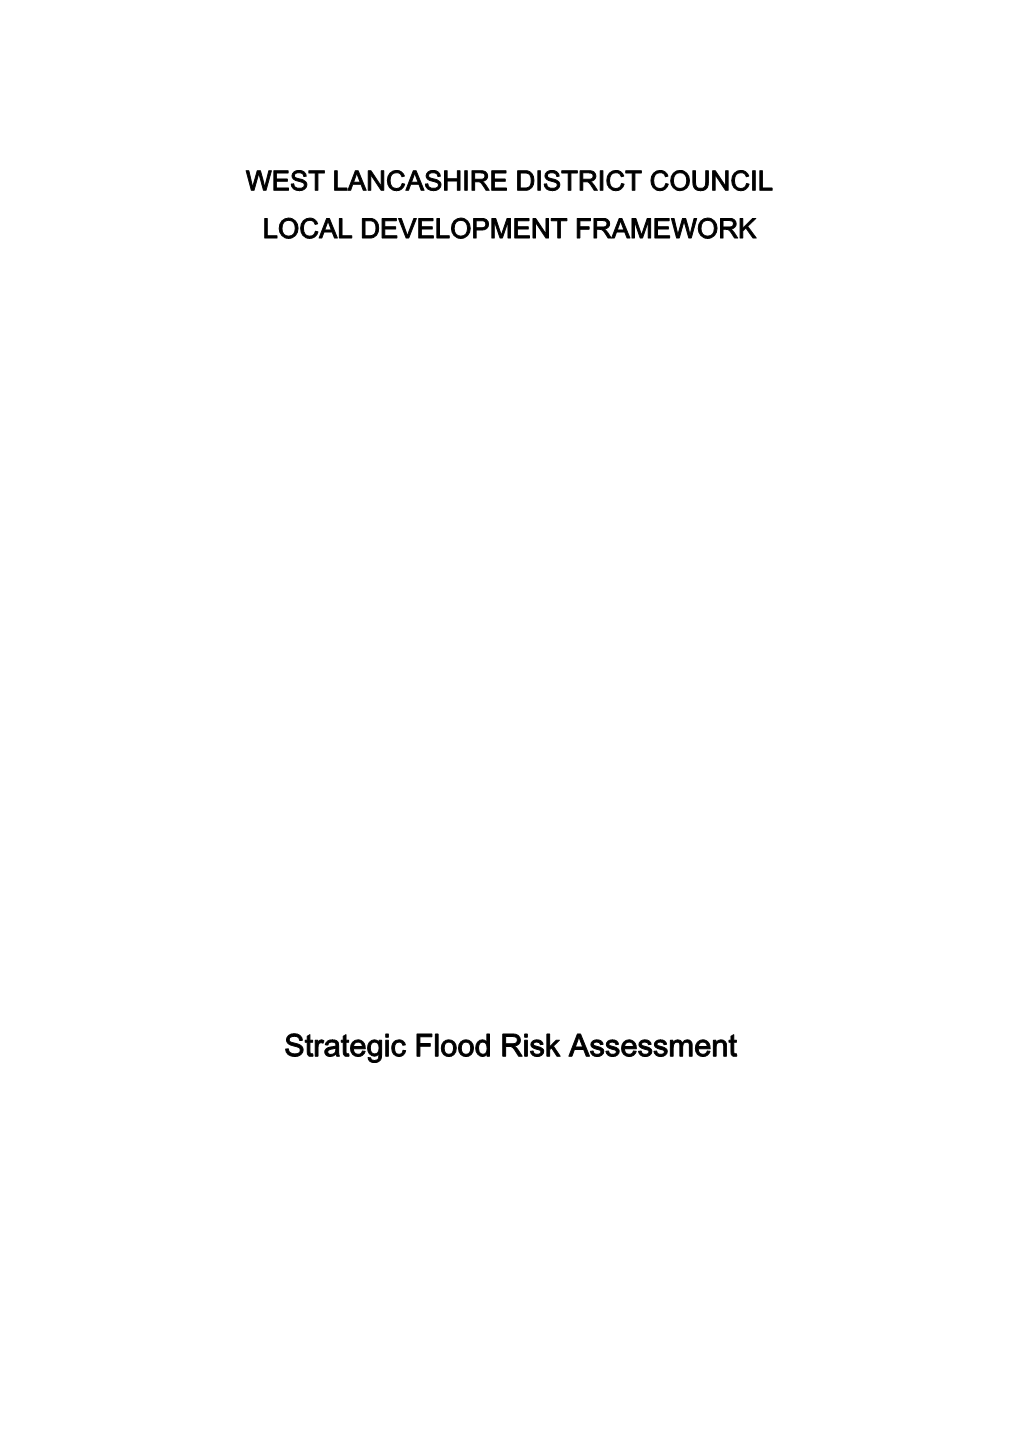 Strategic Flood Risk Assesment for West Lancashire